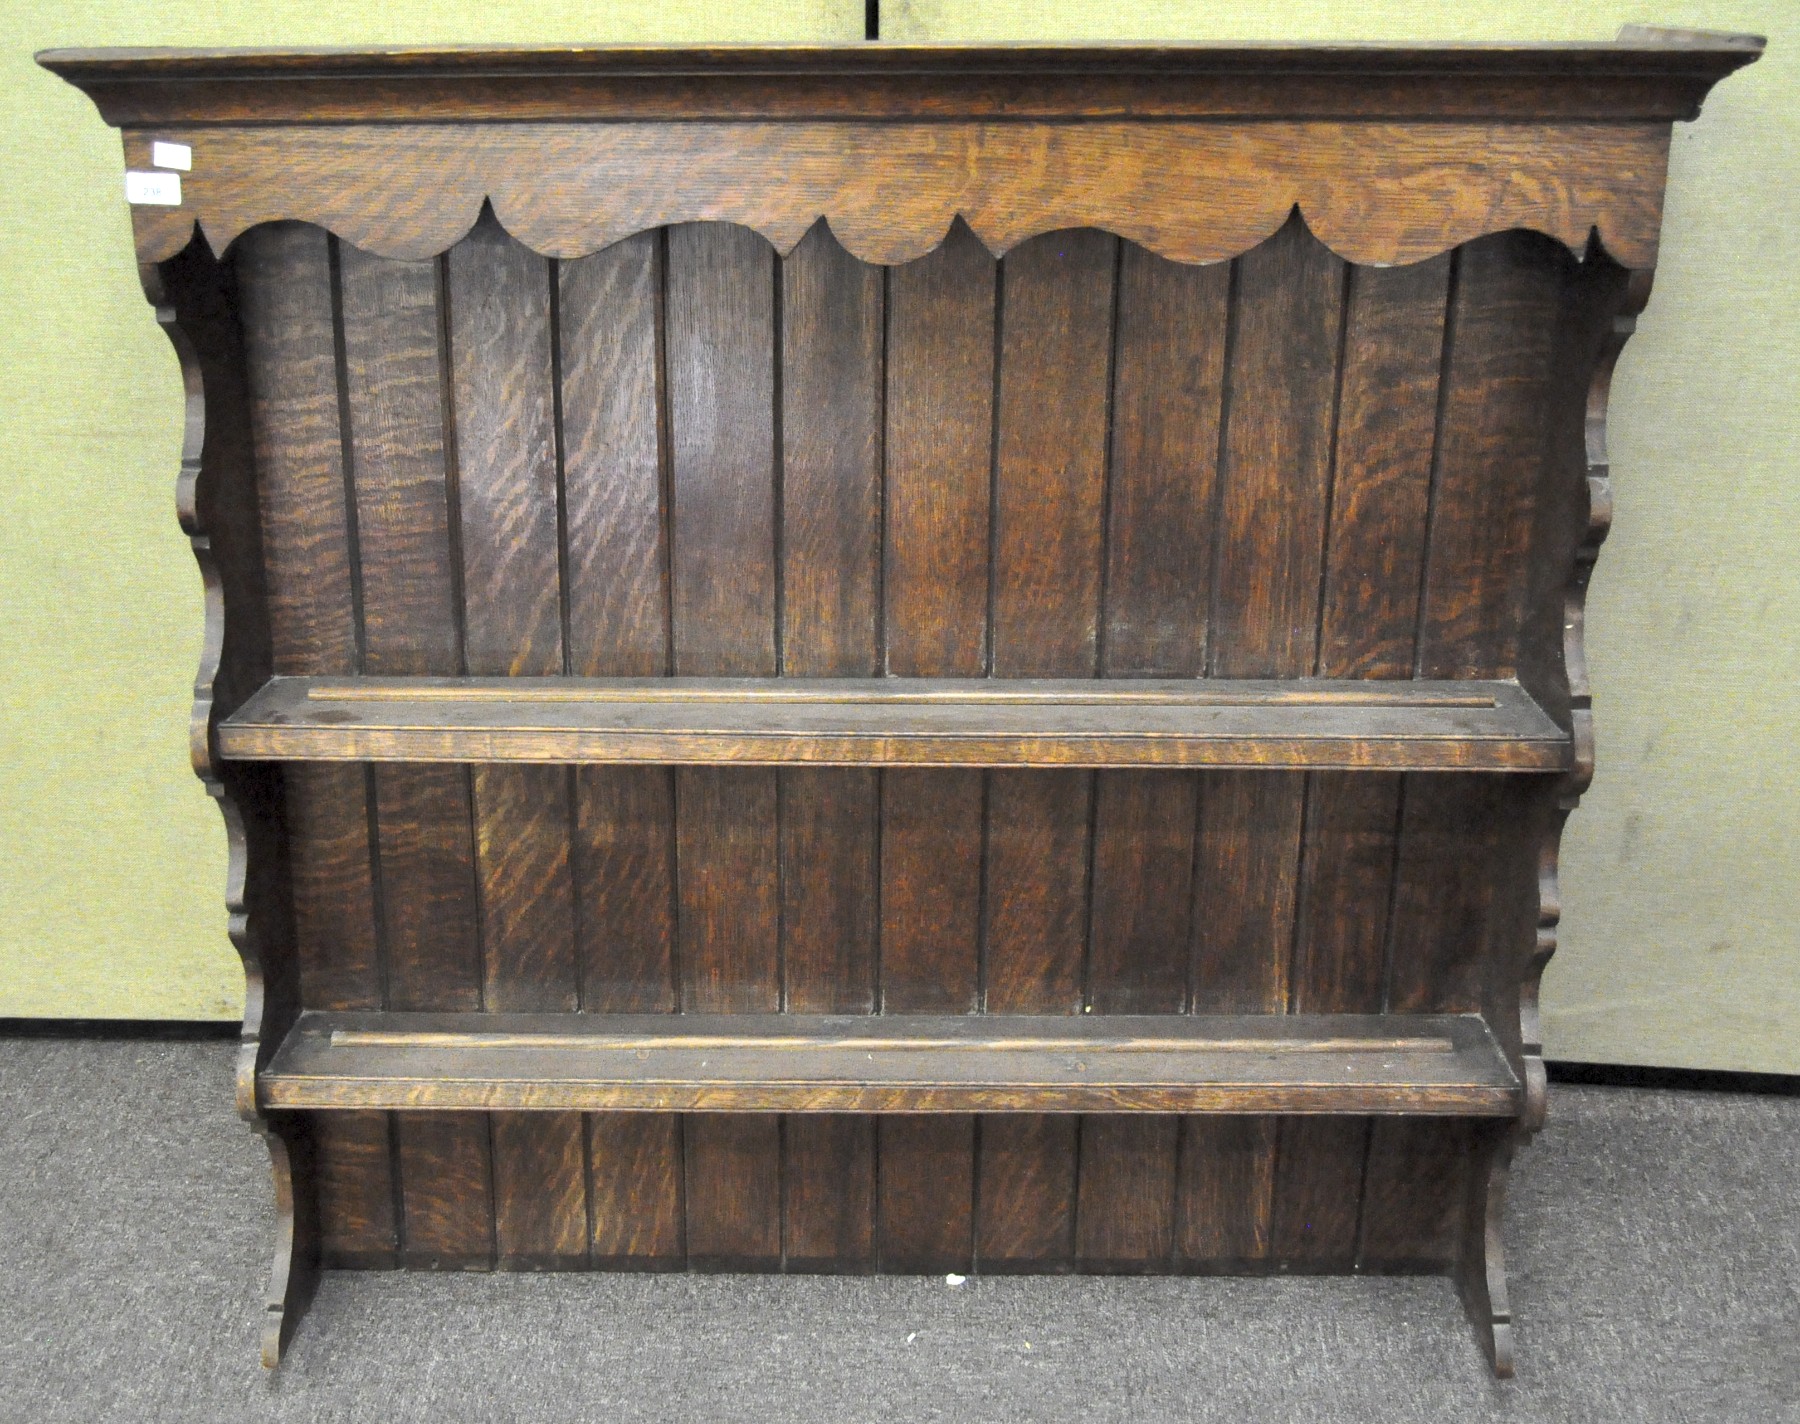 An oak two-shelf top form a kitchen dresser, with shaped edges,